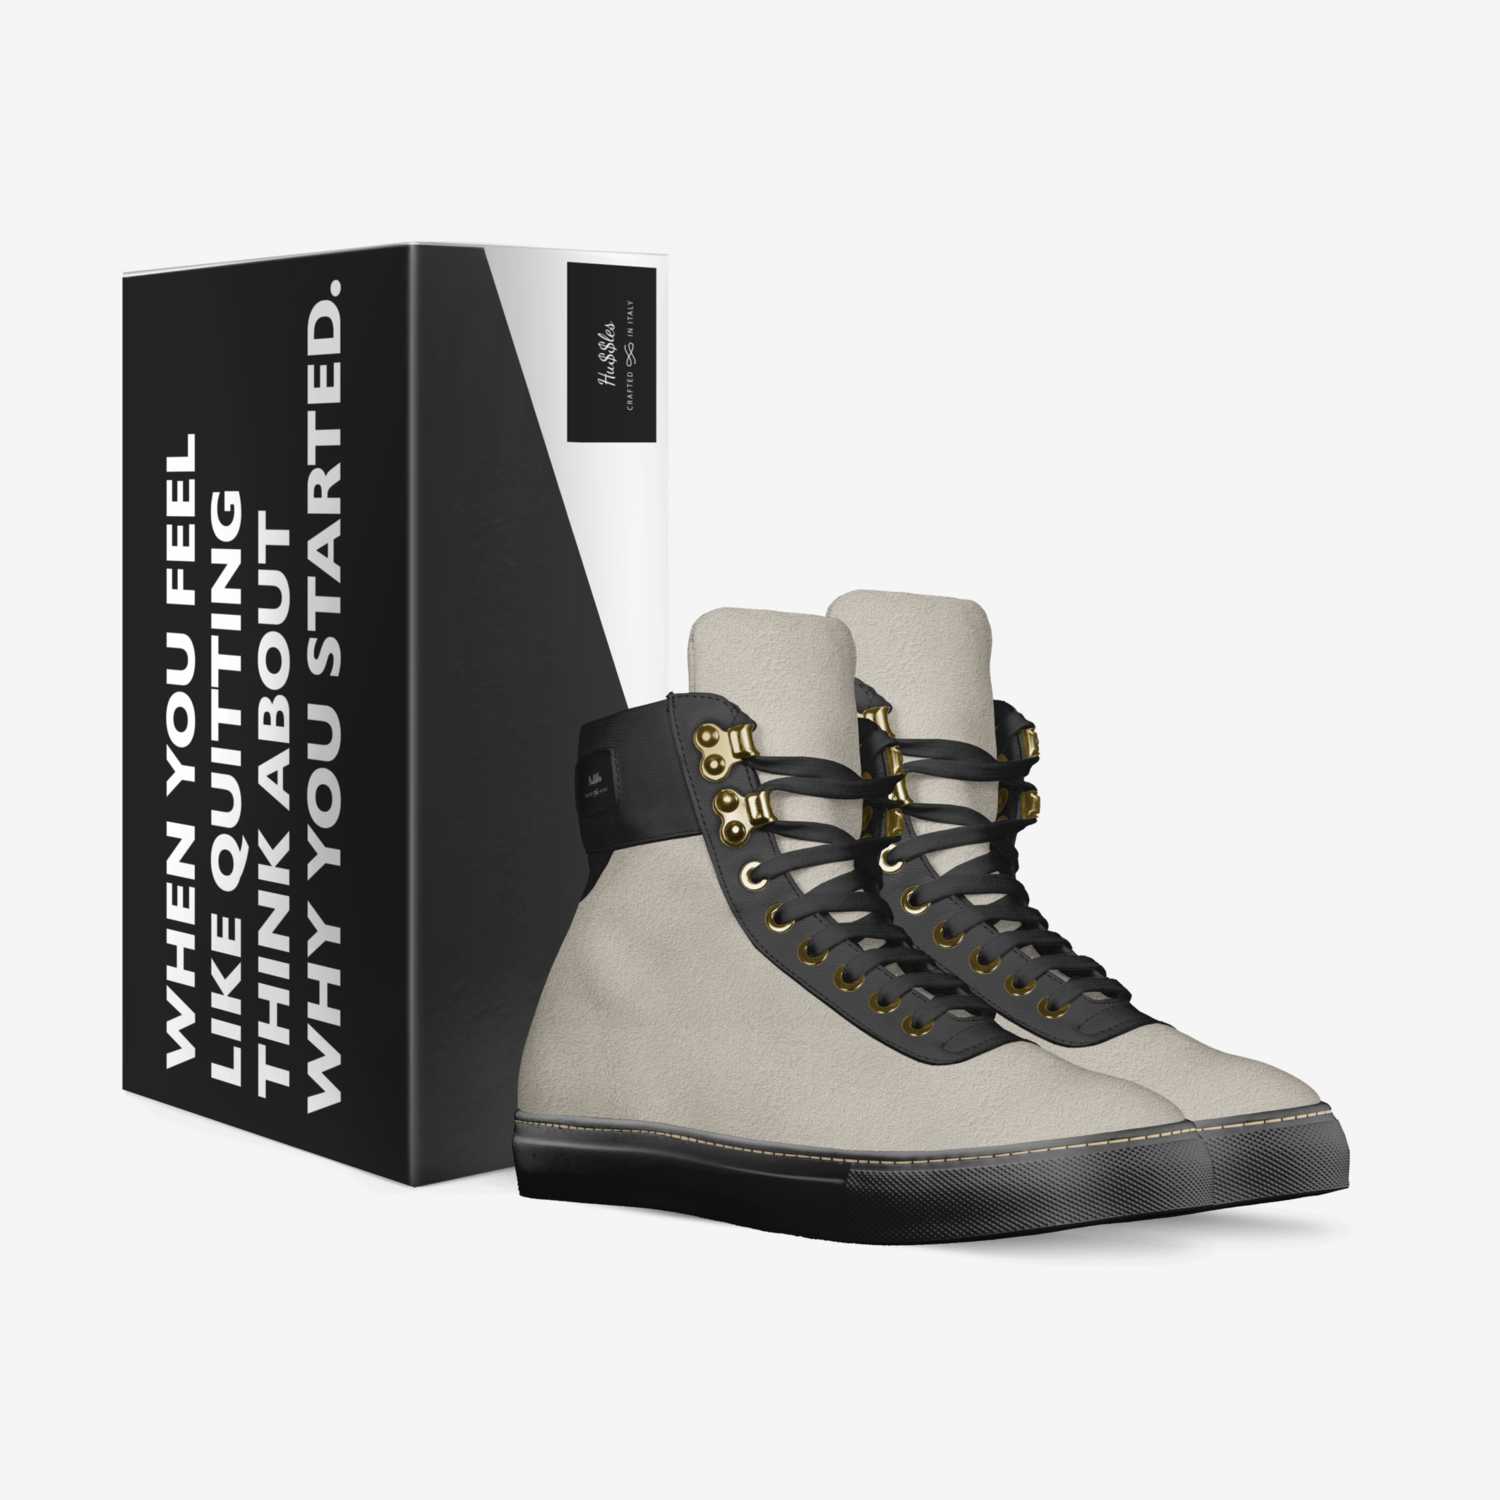 Hu$$les custom made in Italy shoes by Maygan Johnson | Box view